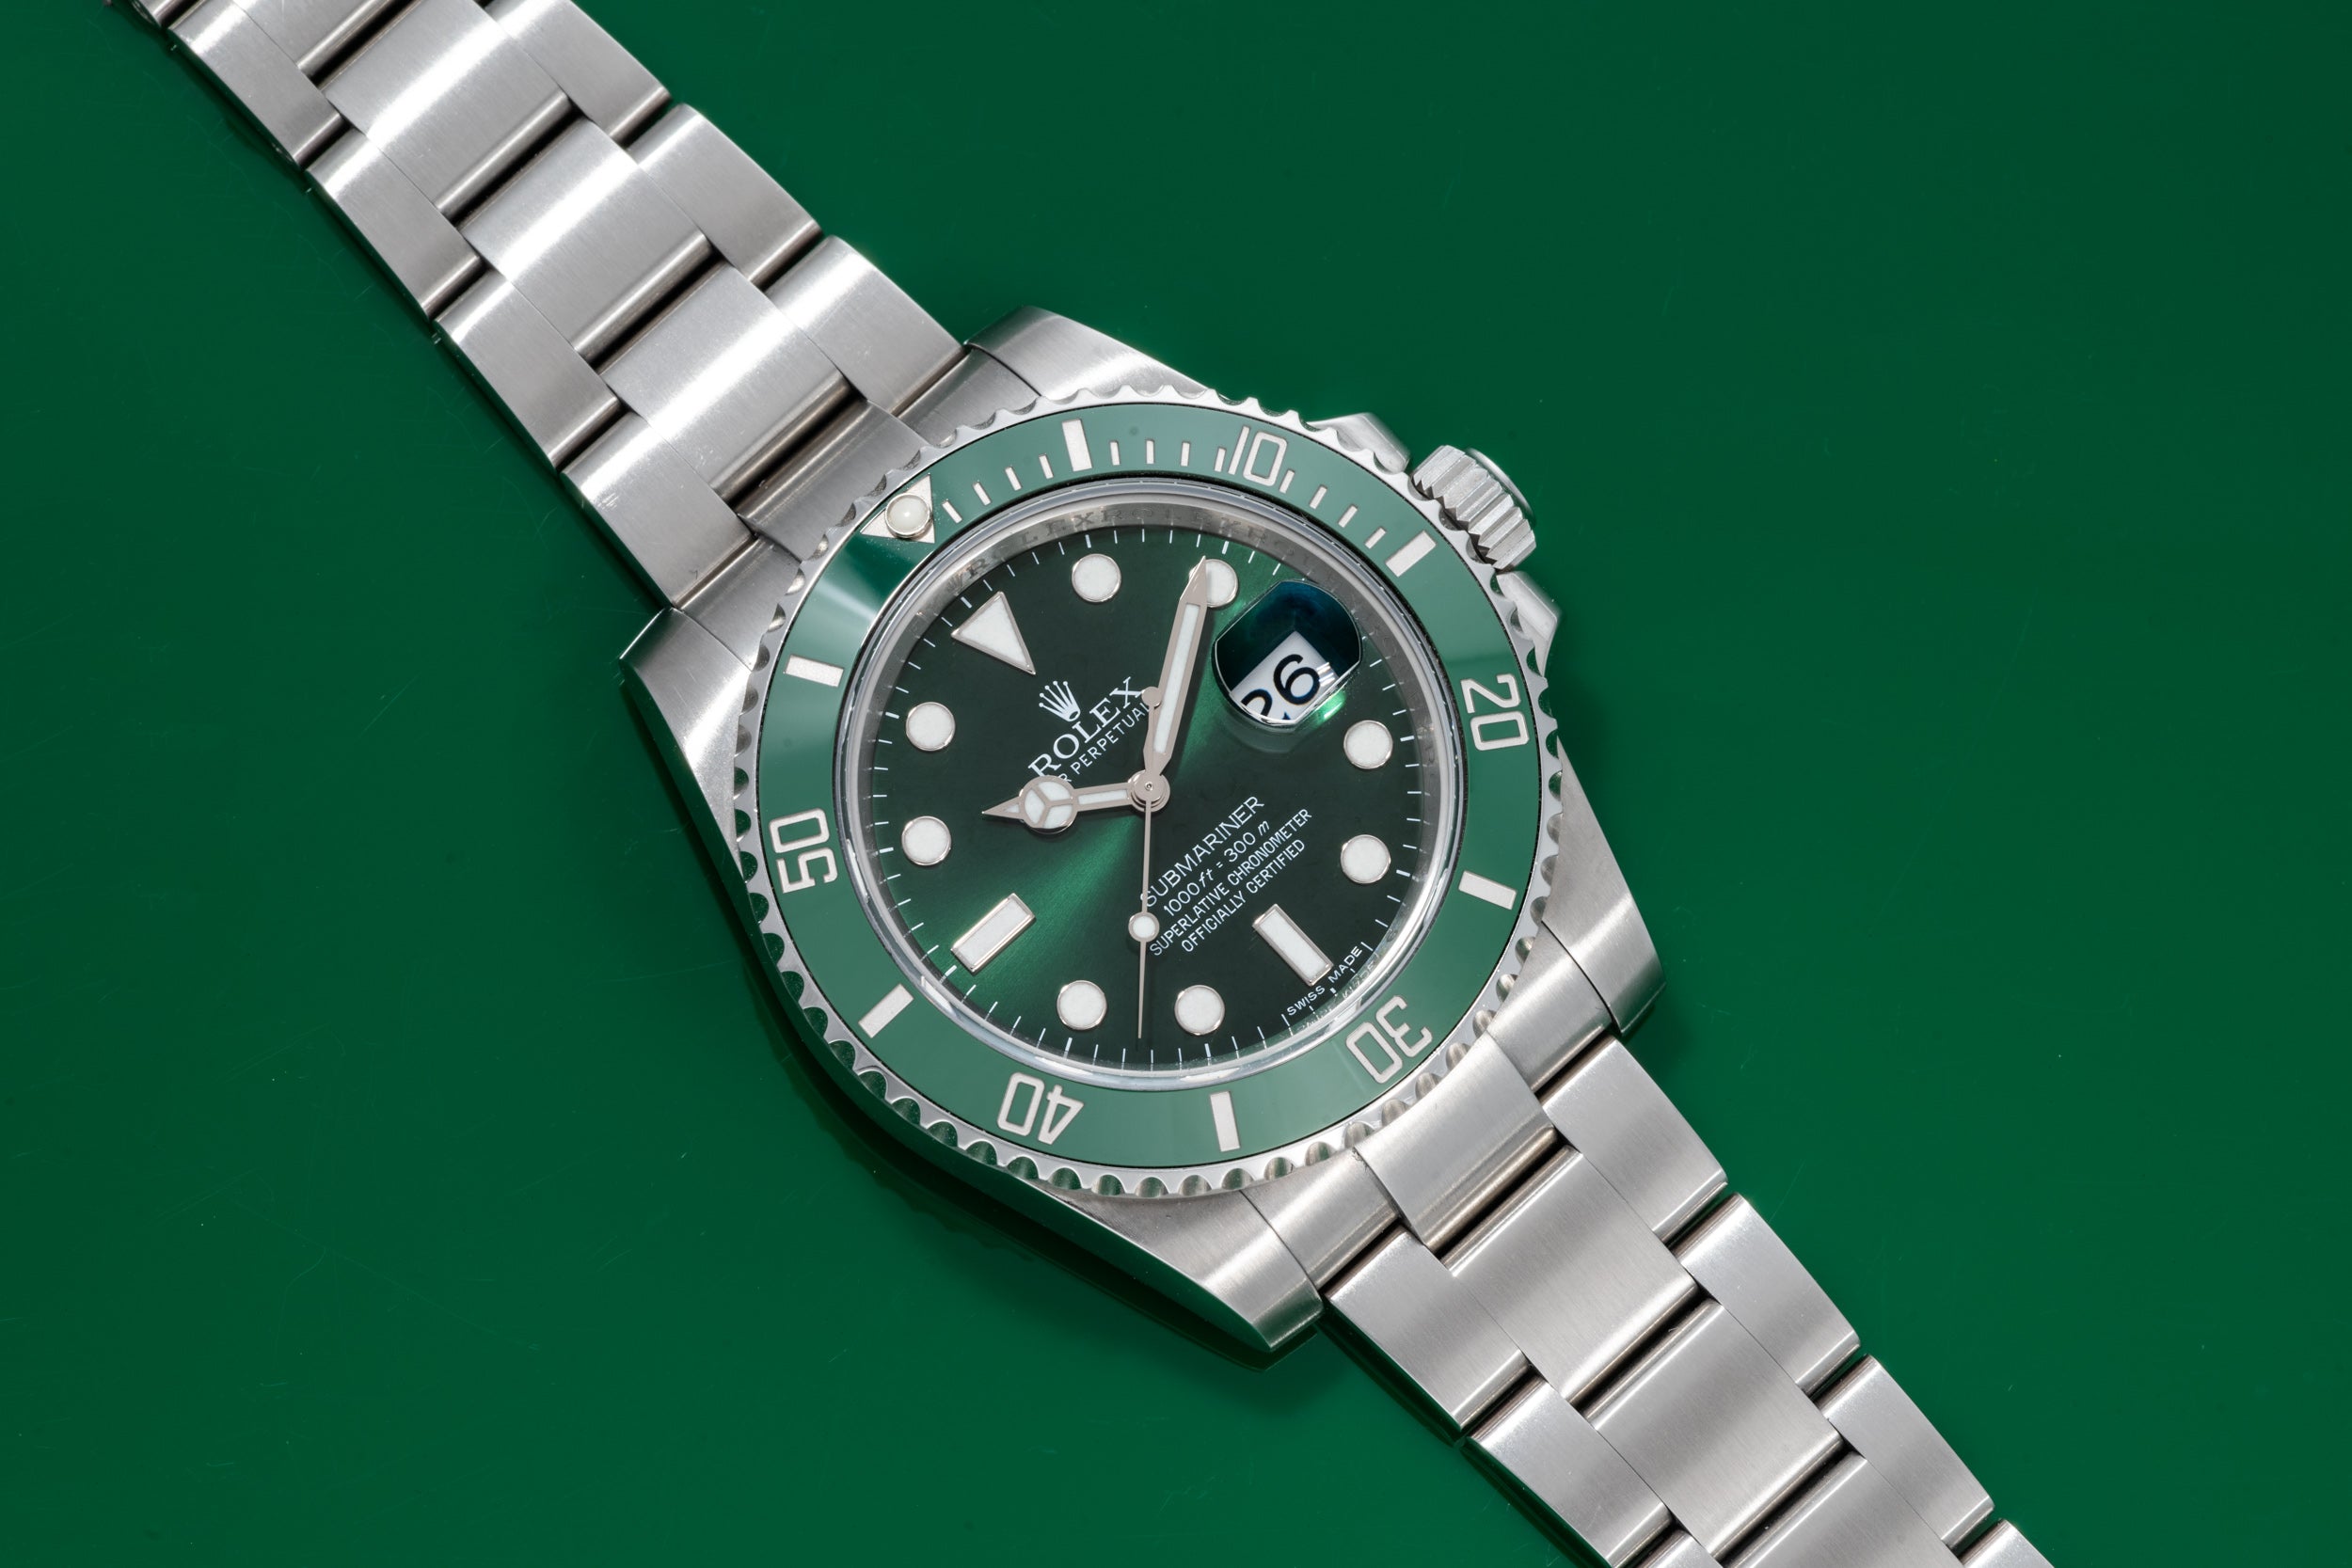 Hulk' Submariner, Ref. 116610LV Stainless steel wristwatch with